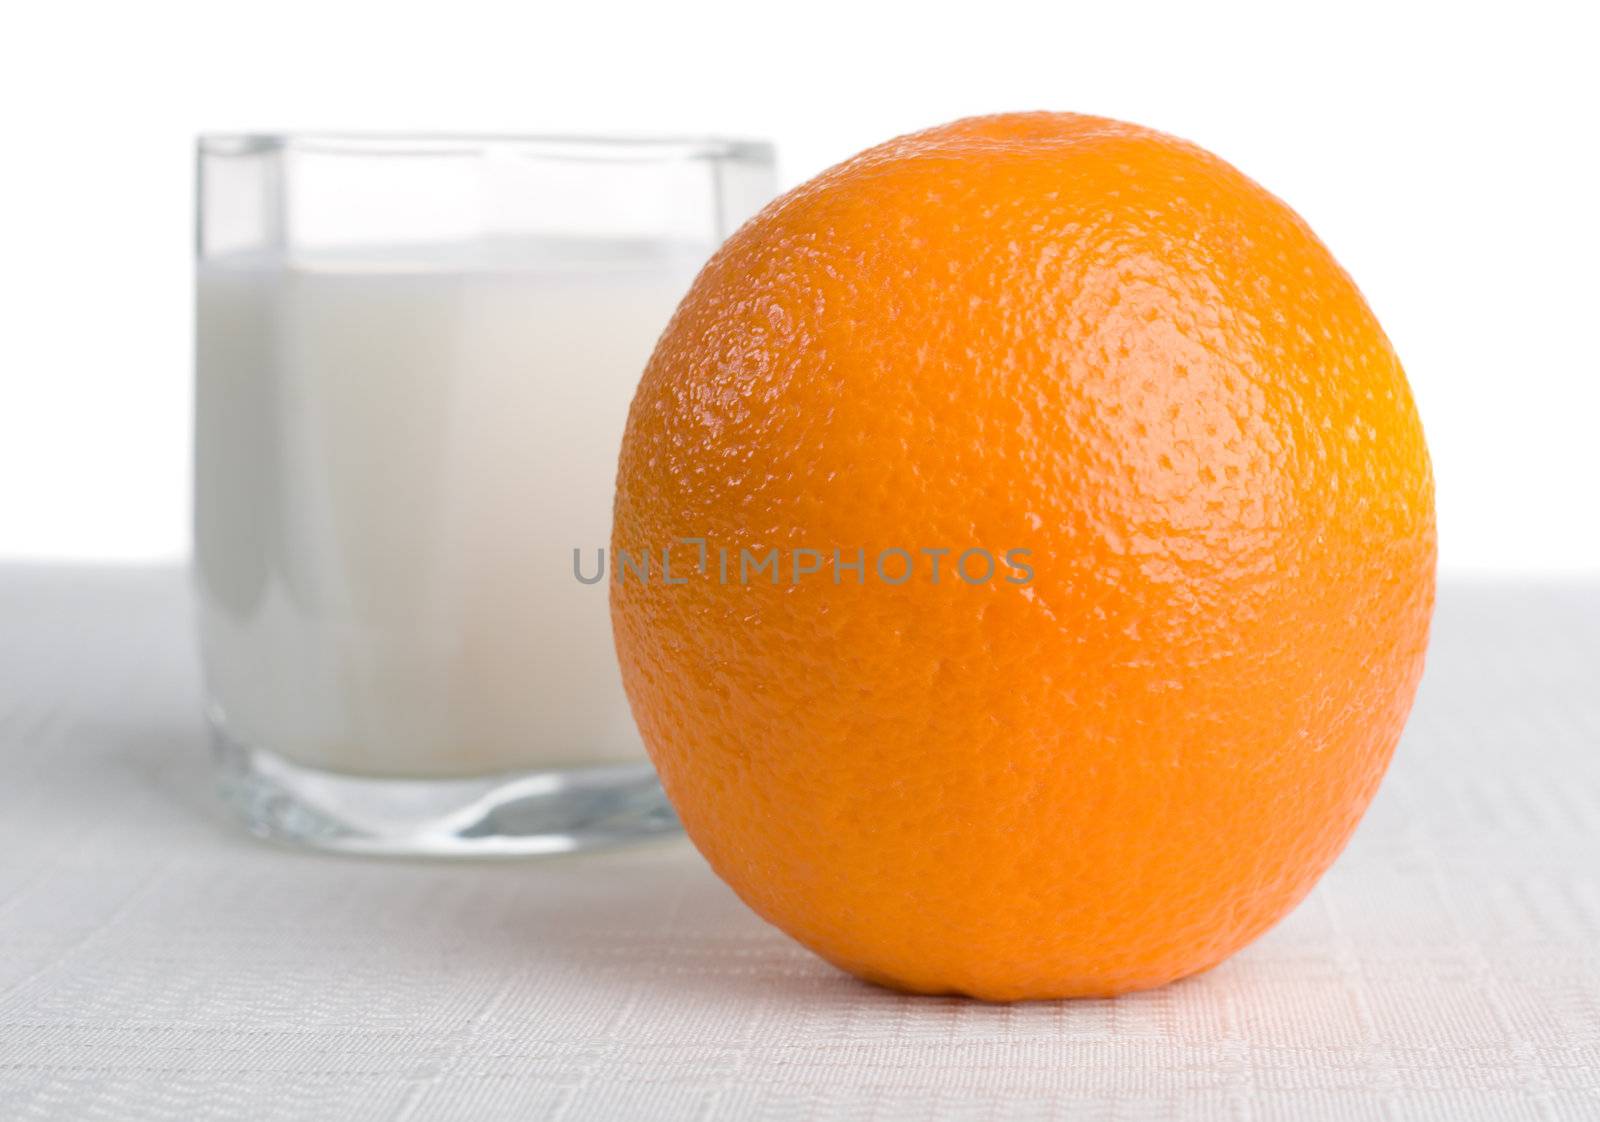 Fresh orange with glass of milk on background